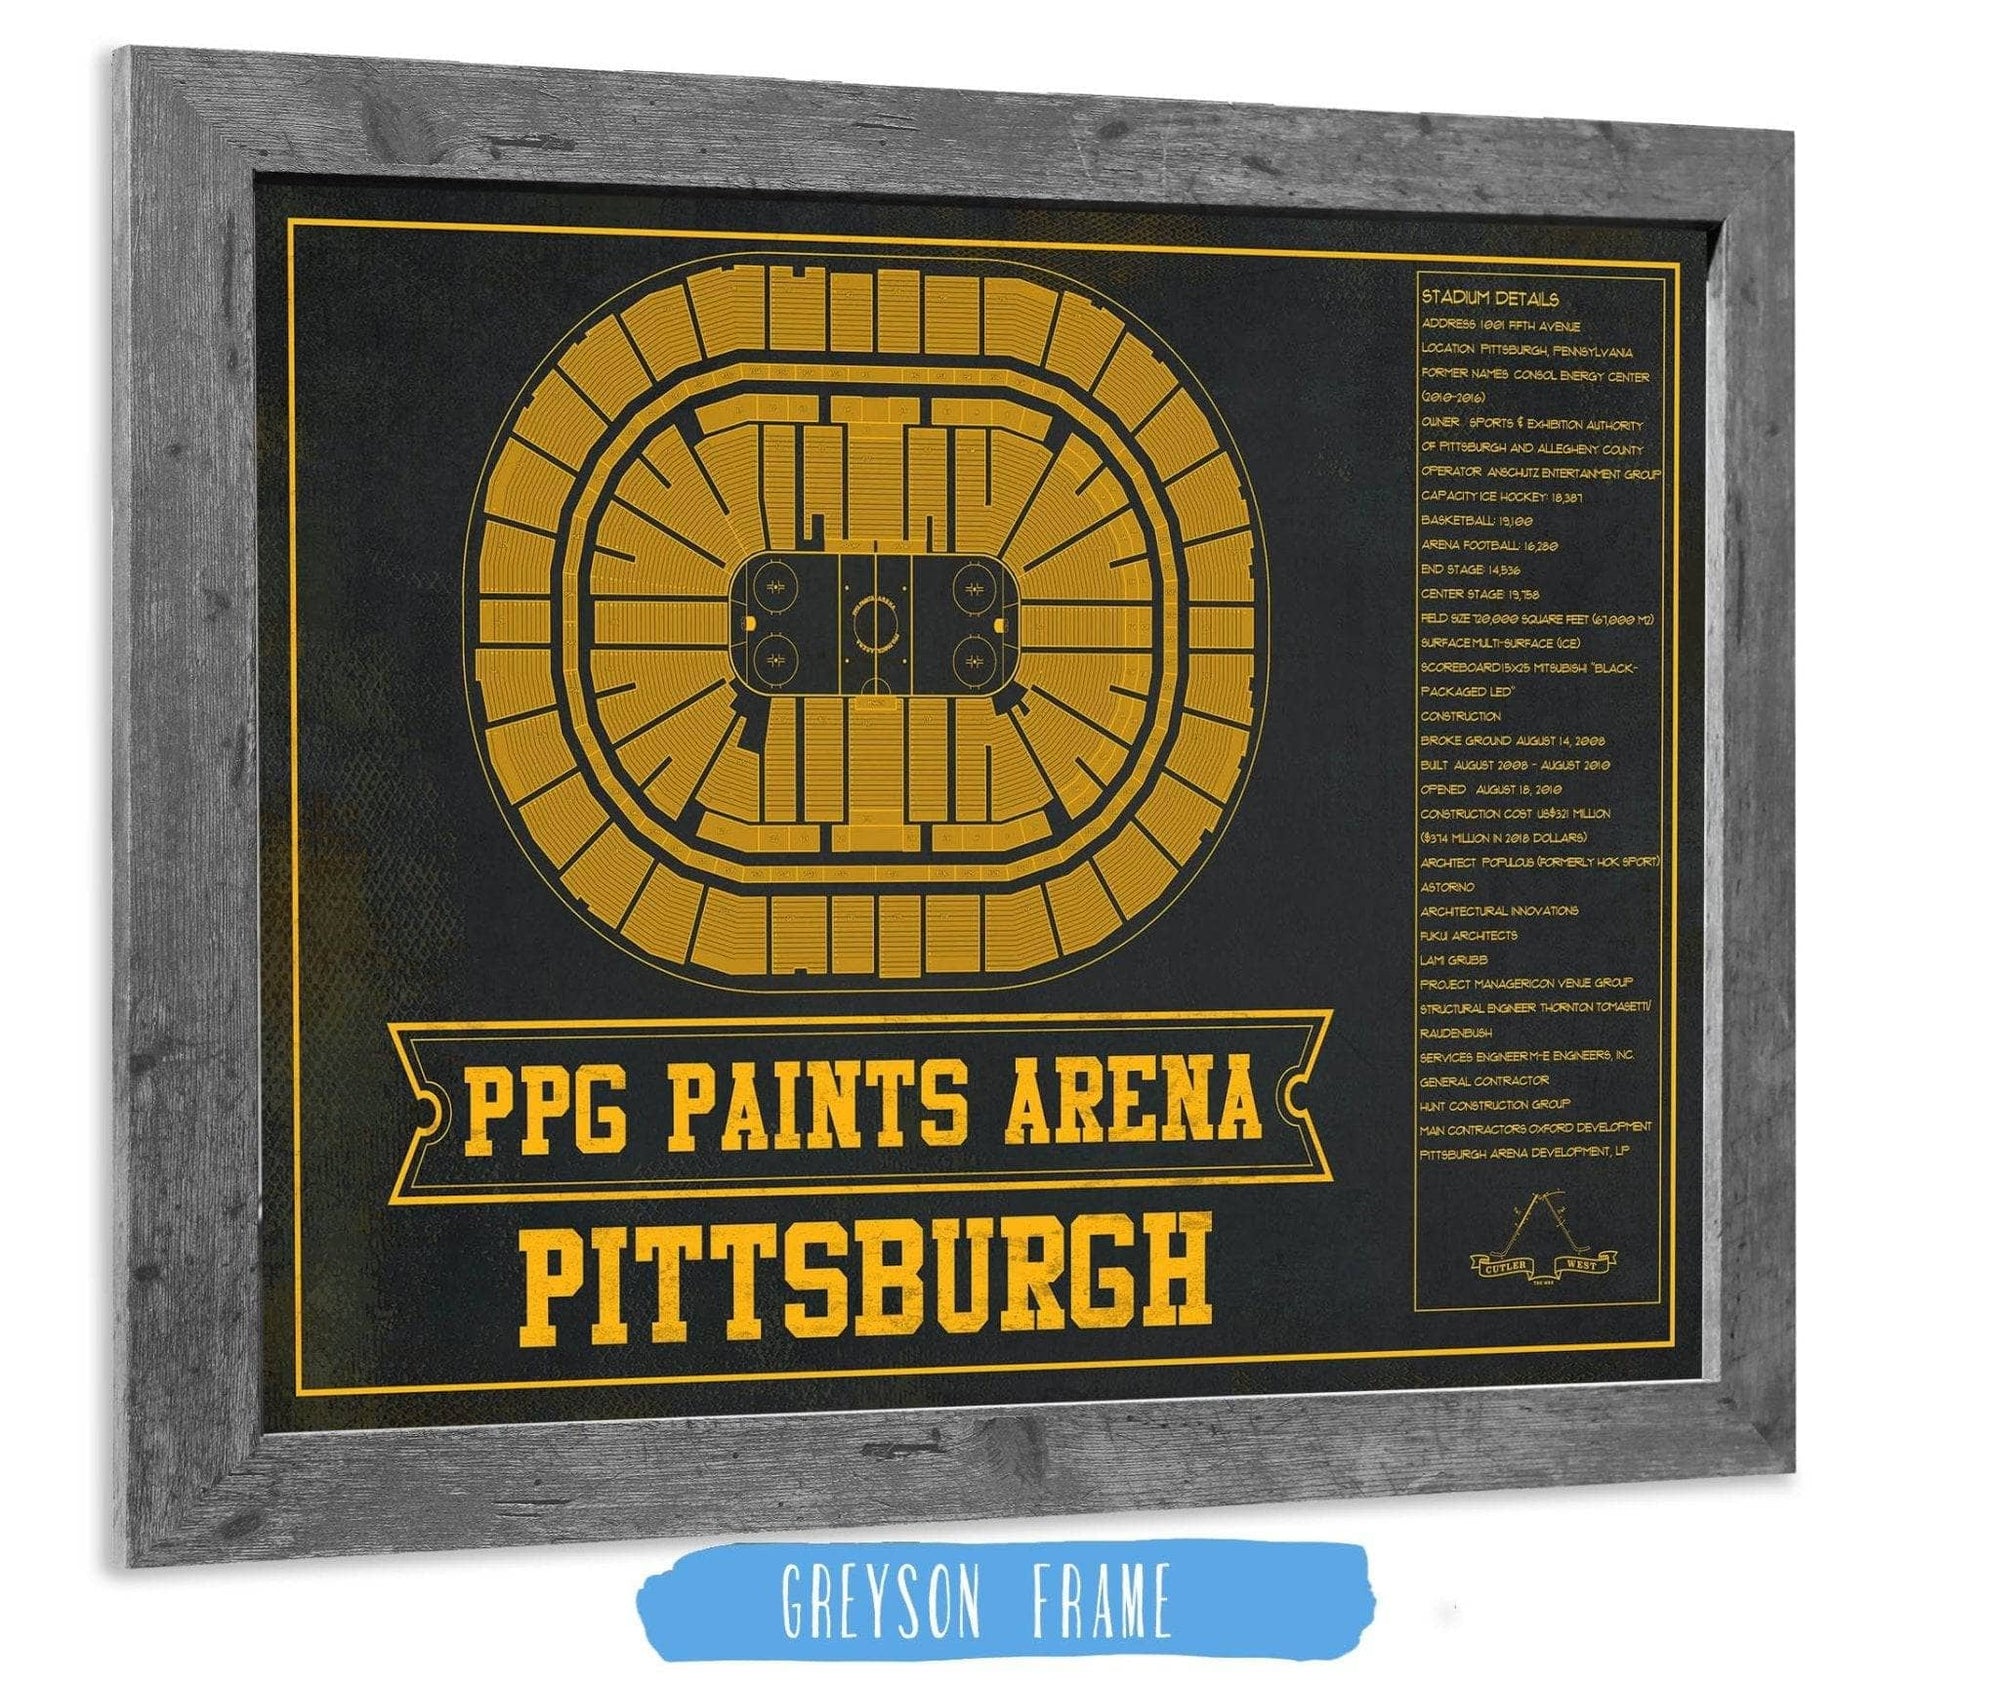 Cutler West 14" x 11" / Greyson Frame Pittsburgh Penguins PPG Paints Arena Seating Chart - Vintage Hockey Team Color Print 659983736-TEAM